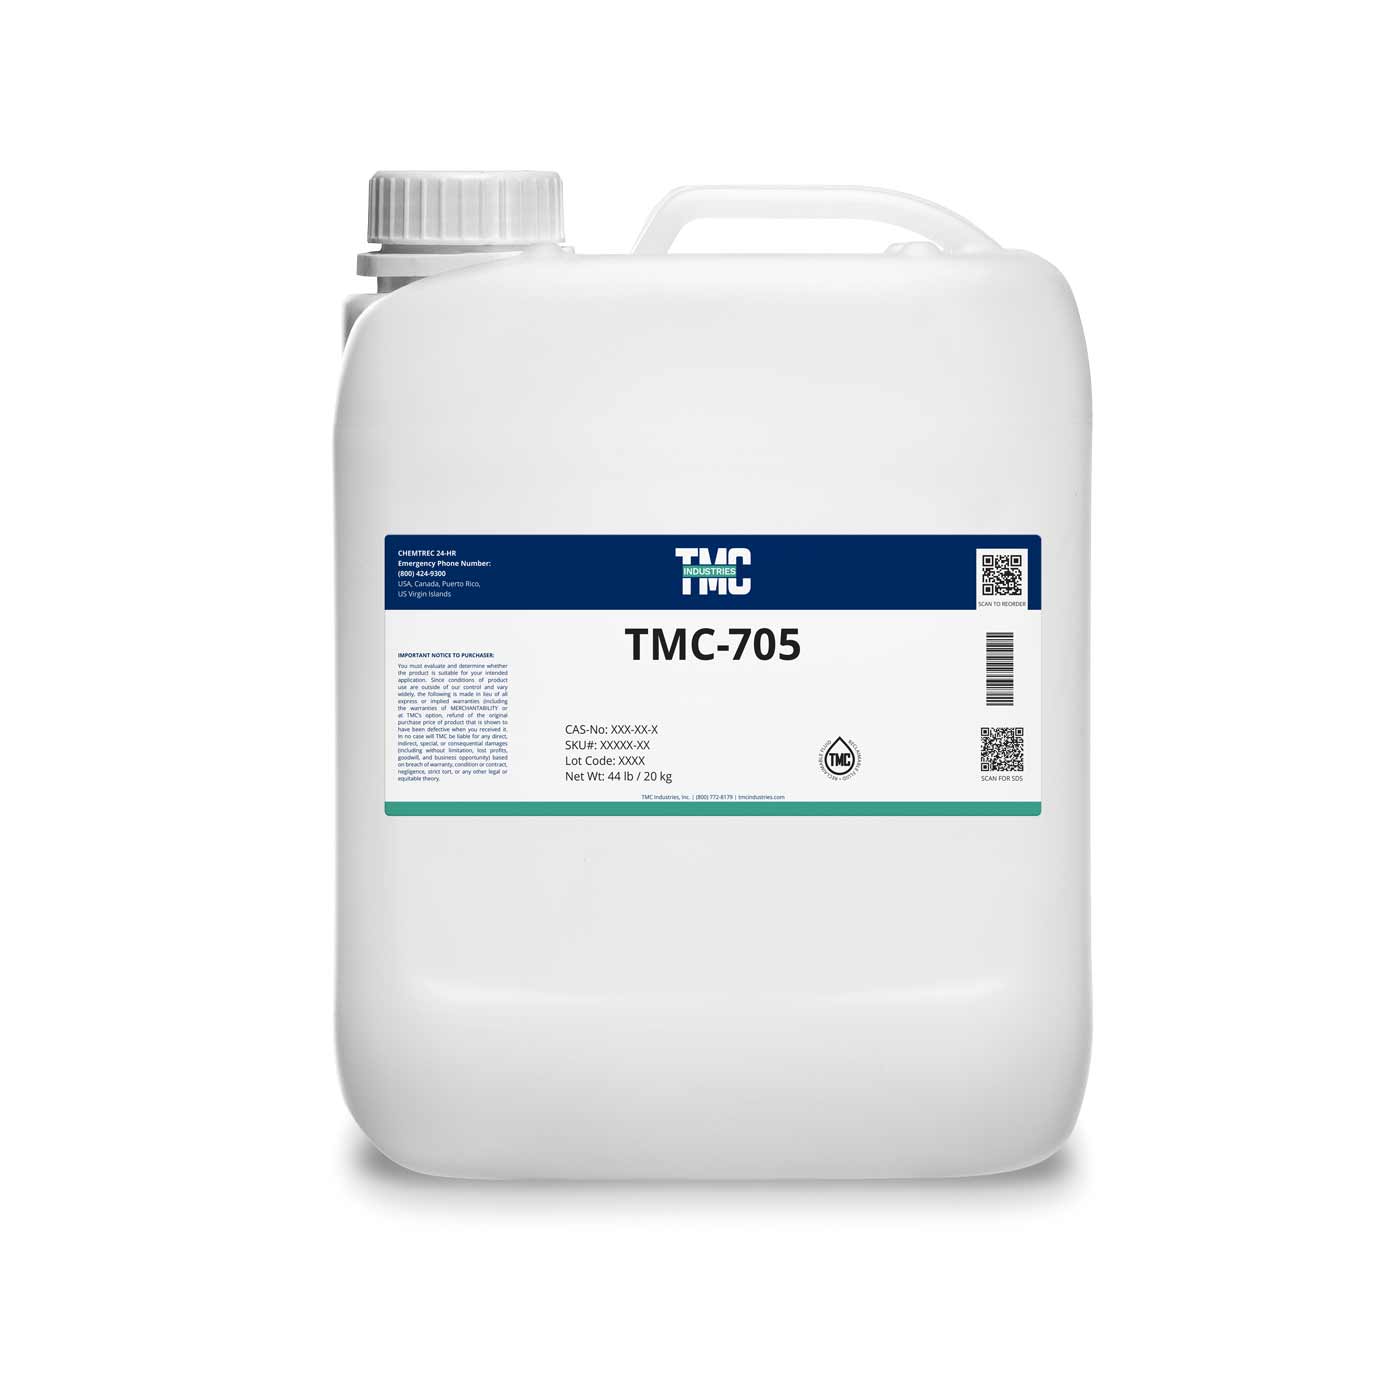 TMC-705 DIFFUSION PUMP OIL